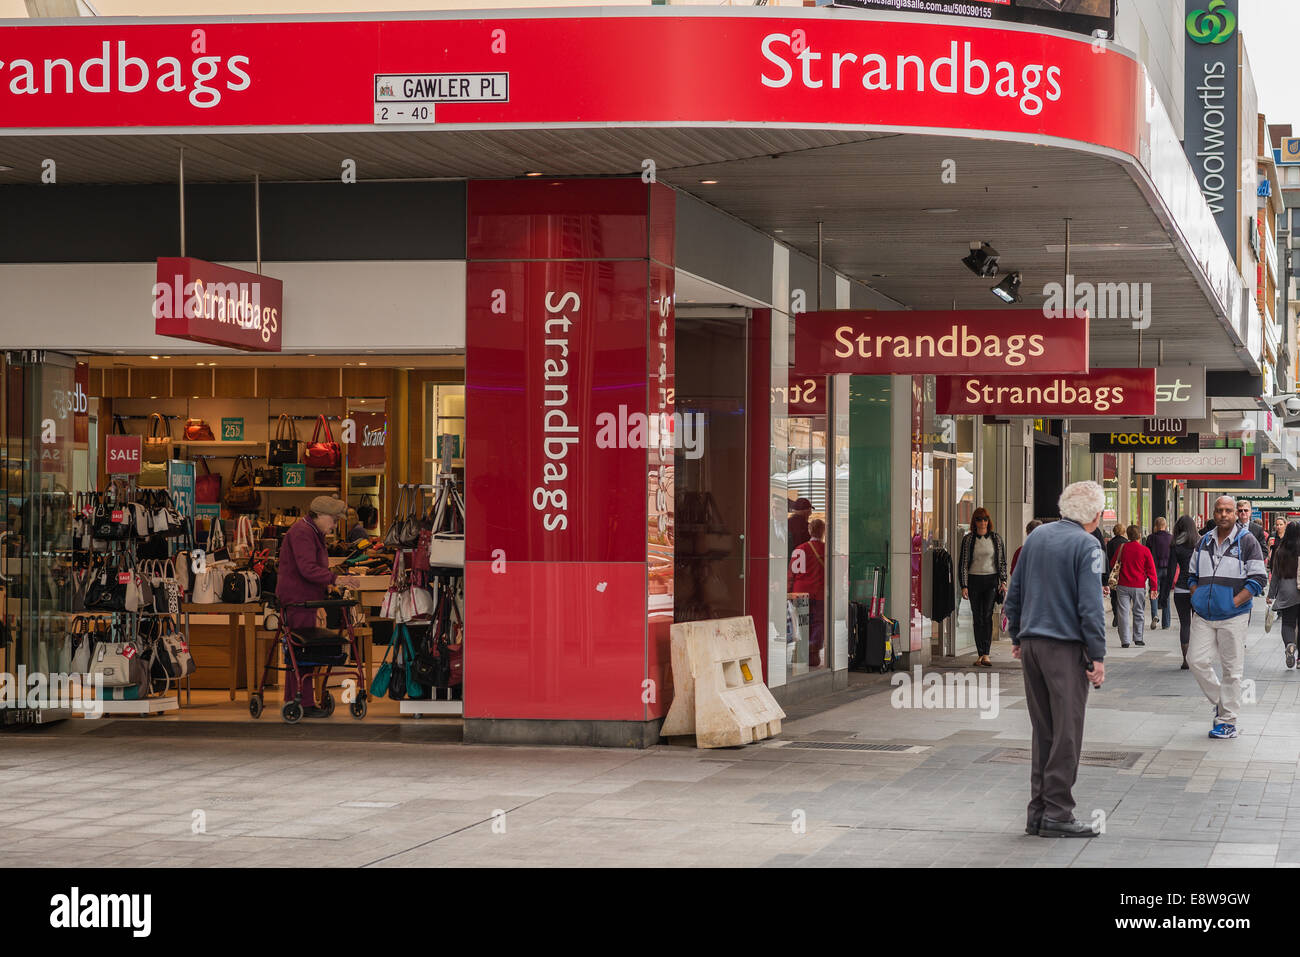 Strandbags shop front and signage Stock Photo